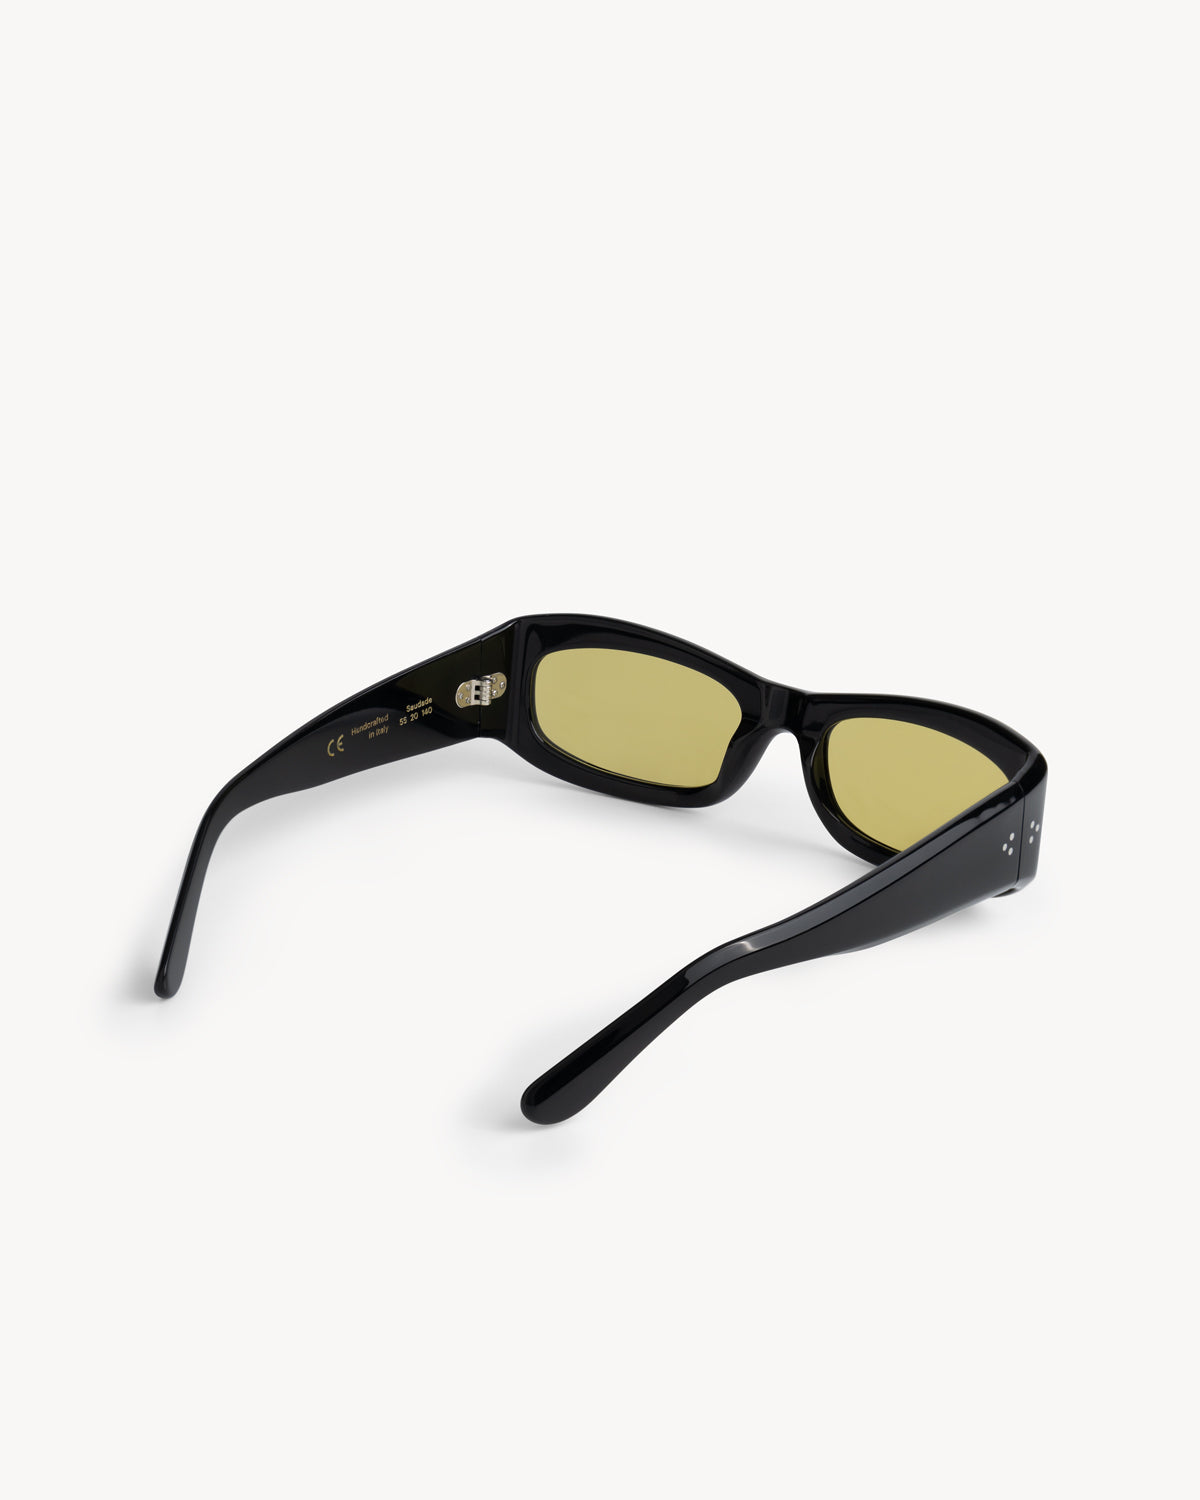 Port Tanger Saudade Sunglasses in Black Acetate and Warm Olive Lenses 3